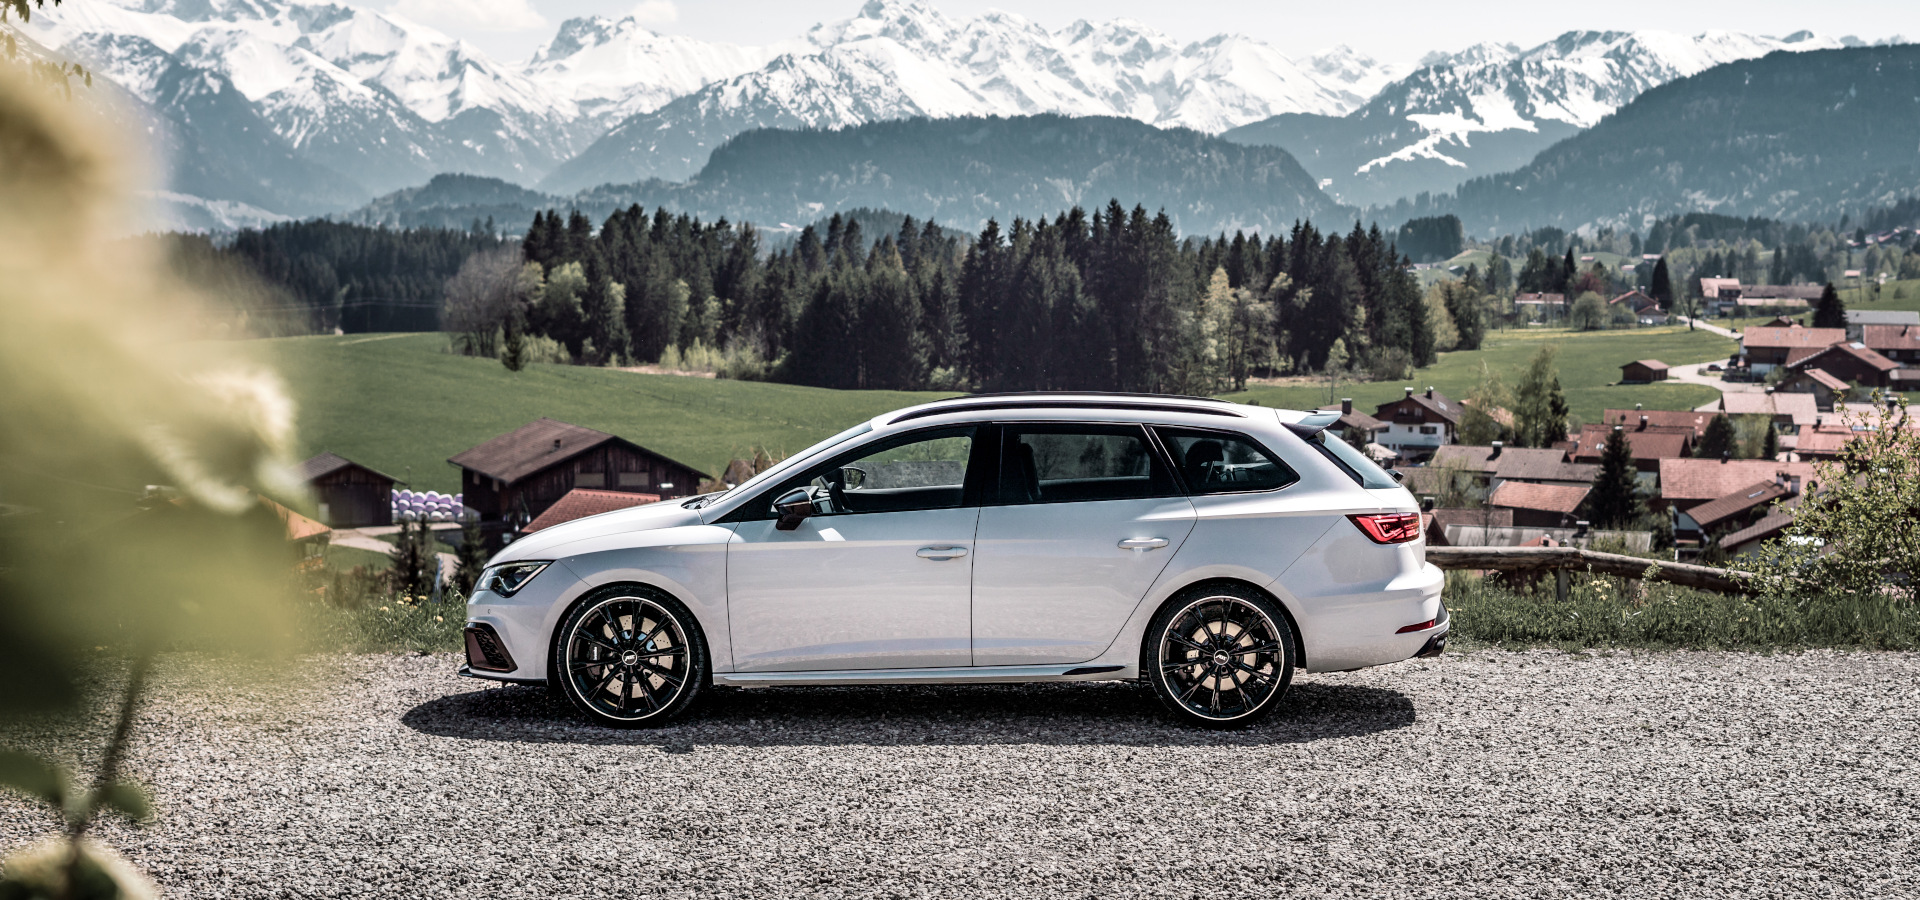 CUPRA Leon - Audi Tuning, VW Tuning, Chiptuning von ABT Sportsline.